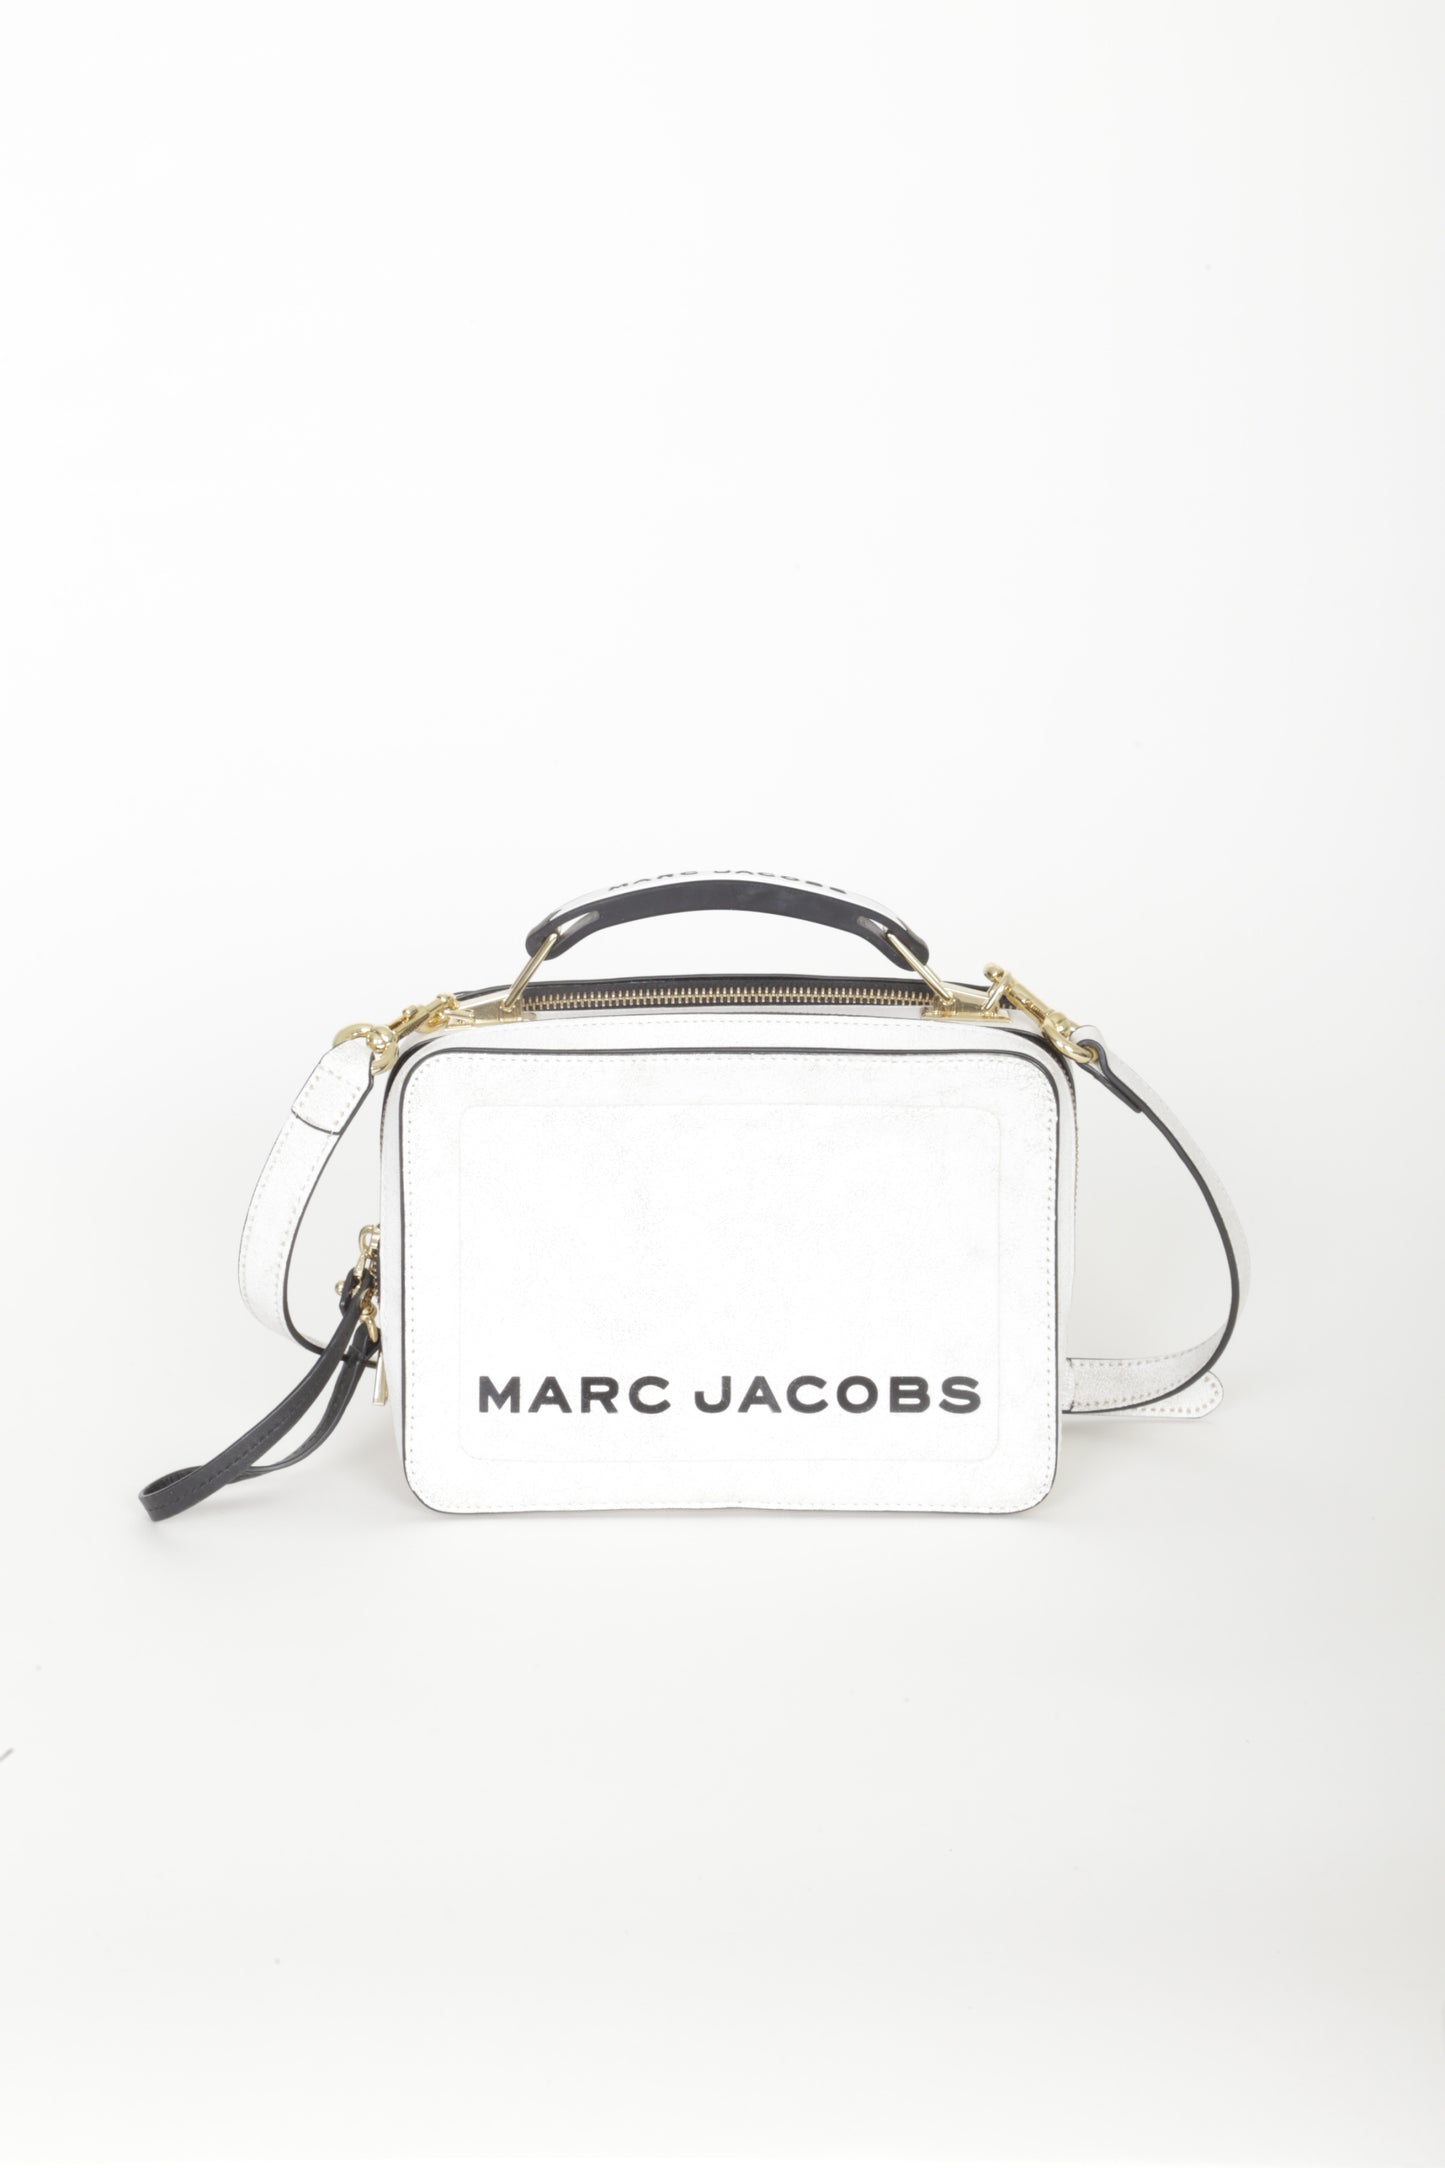 Marc Jacobs Unisex Grey Bag Size O/S